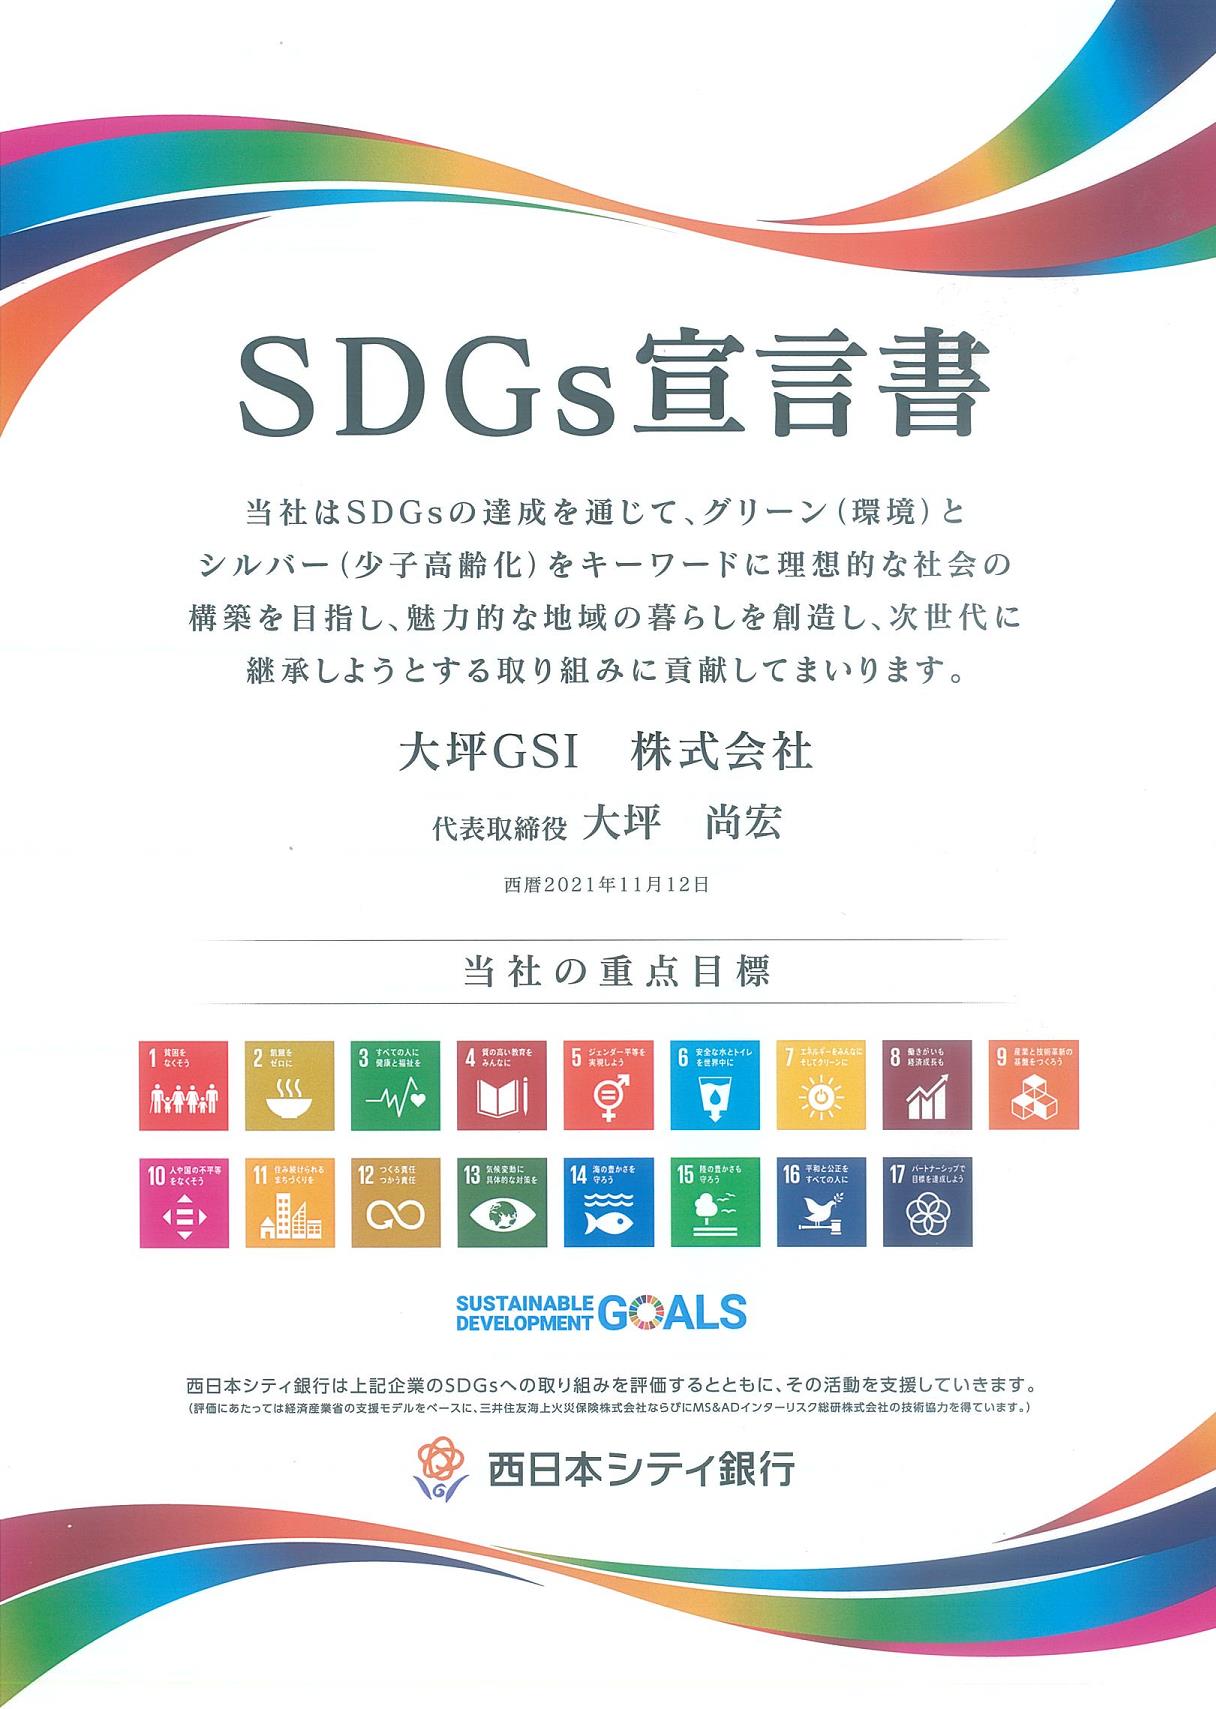 SDGs錾